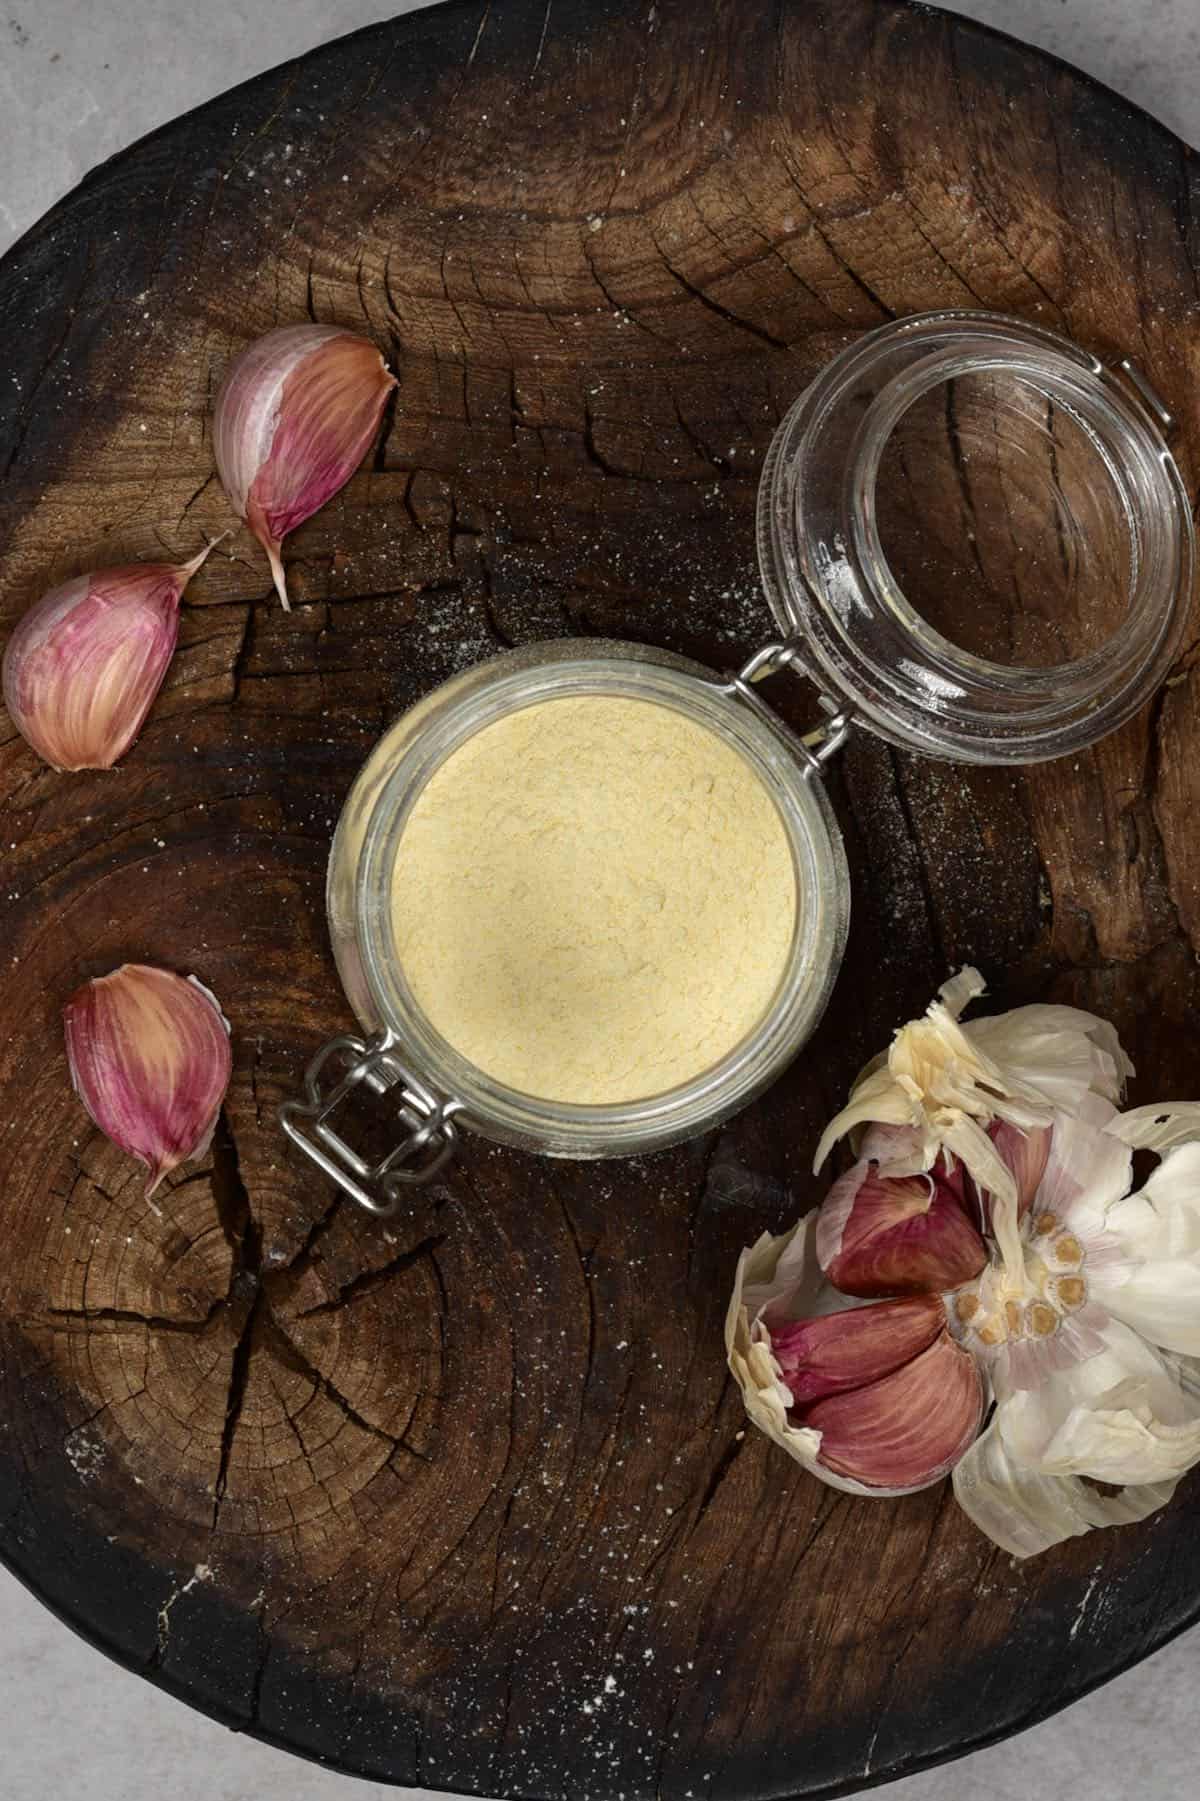 Garlic powder in a jar and some garlic cloves on a wooden board